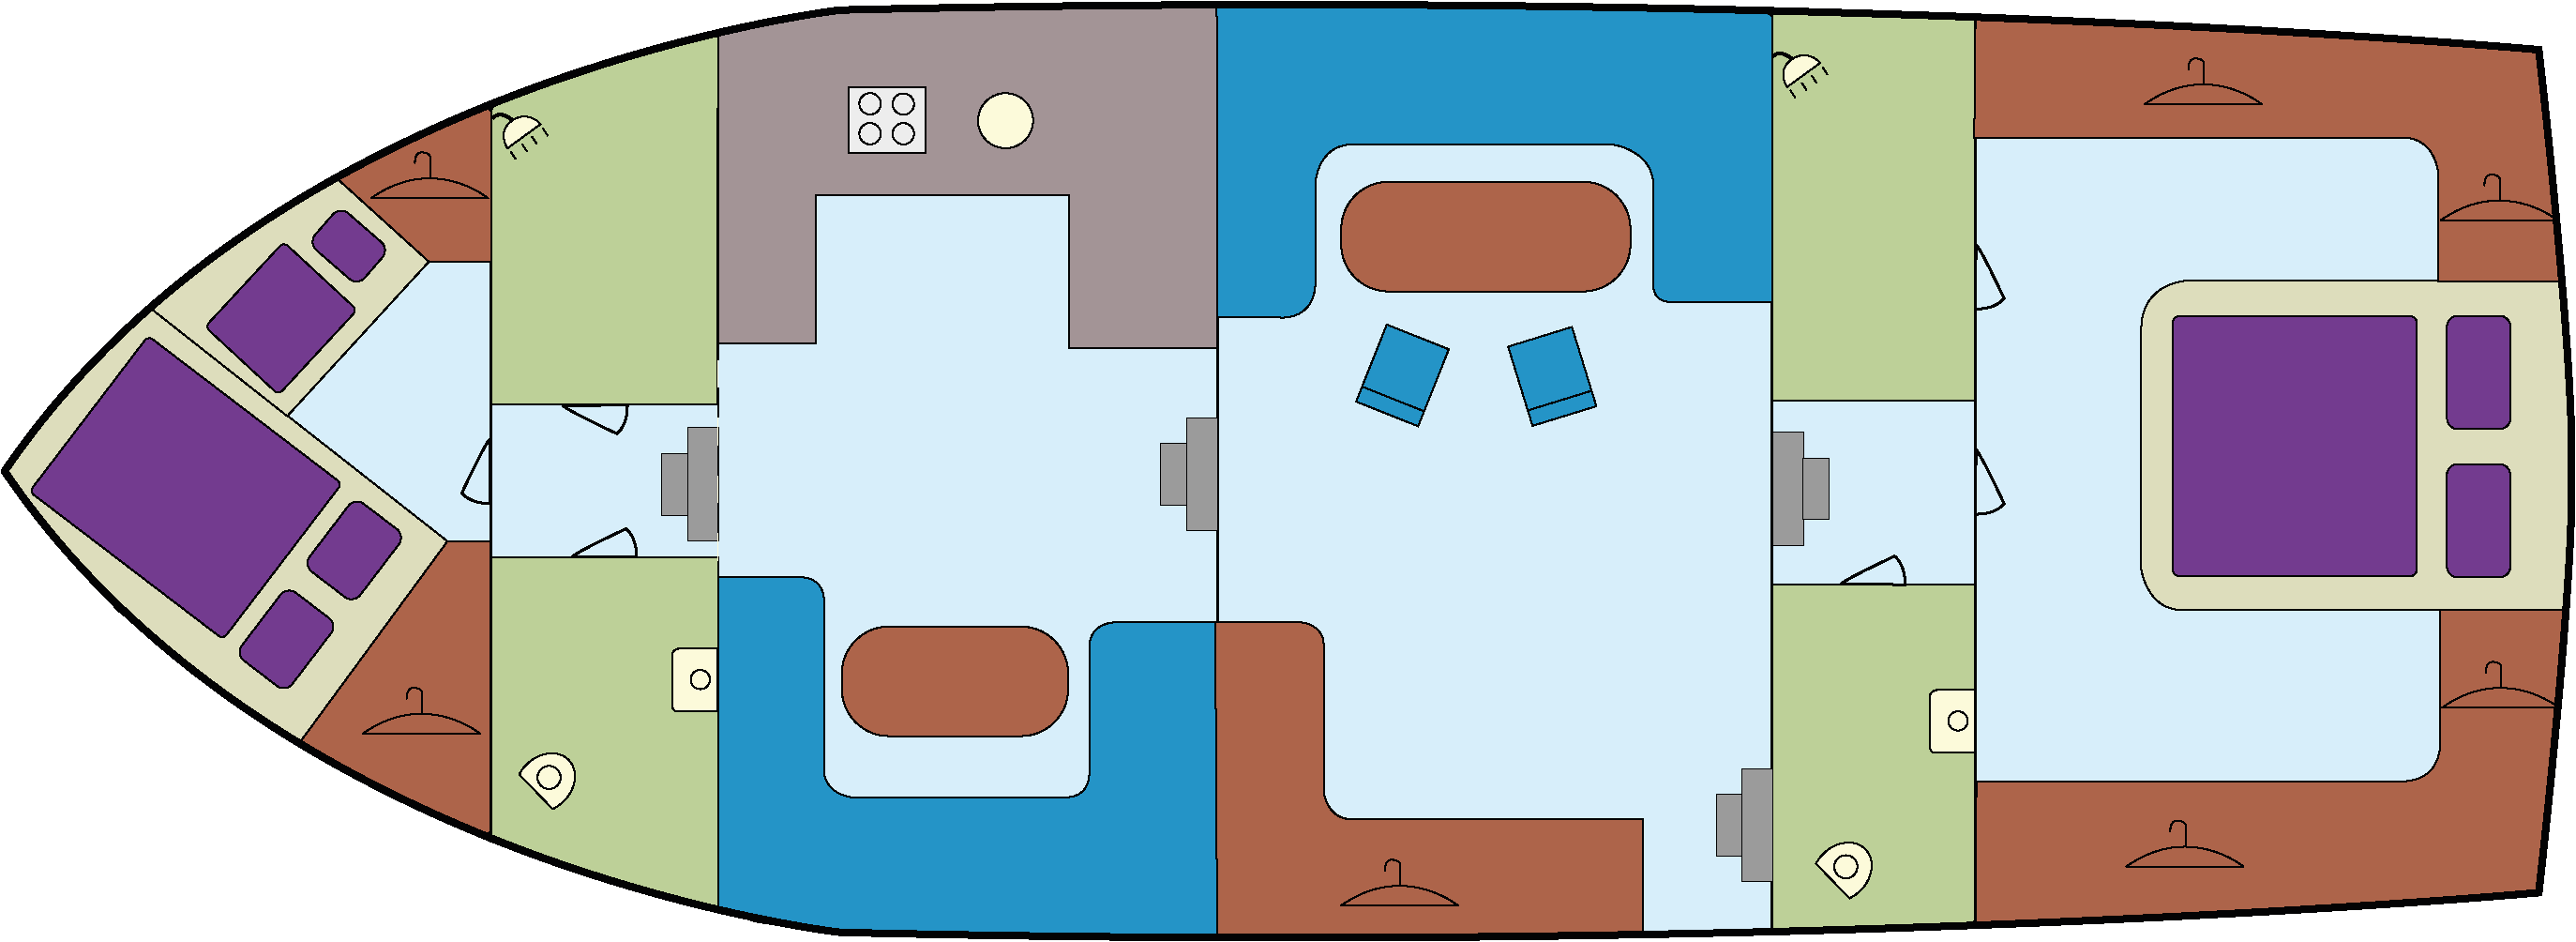 Feriado Elite - Floor Plan (2747x1004)